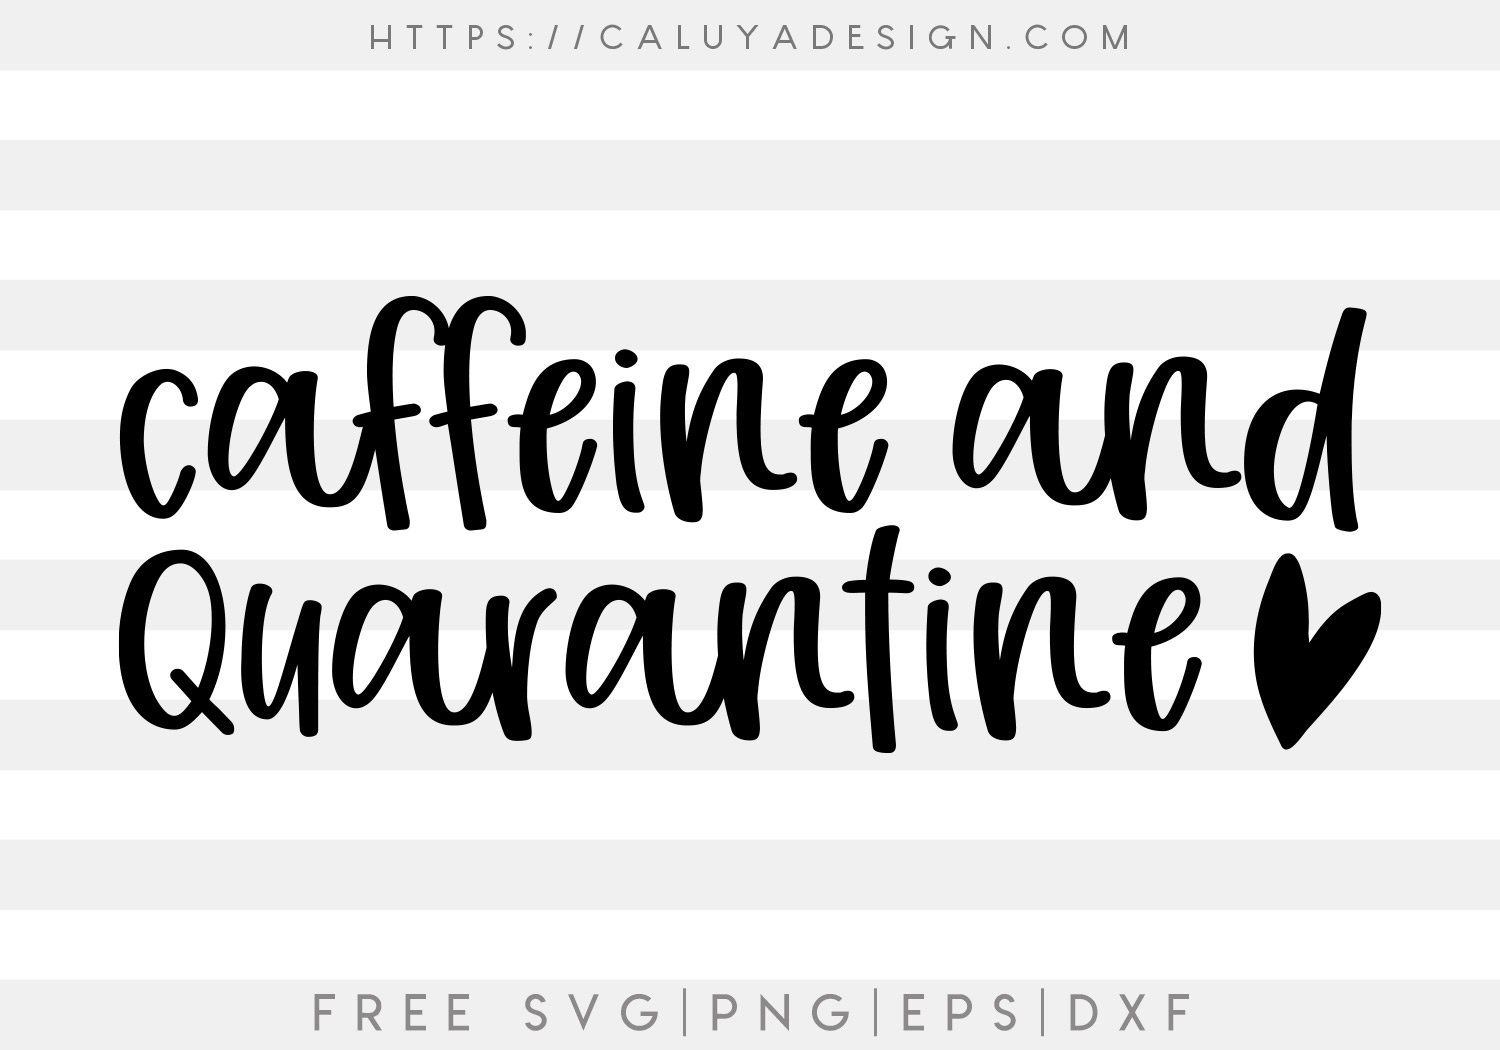 Caffeine and Quarantine SVG, PNG, EPS & DXF